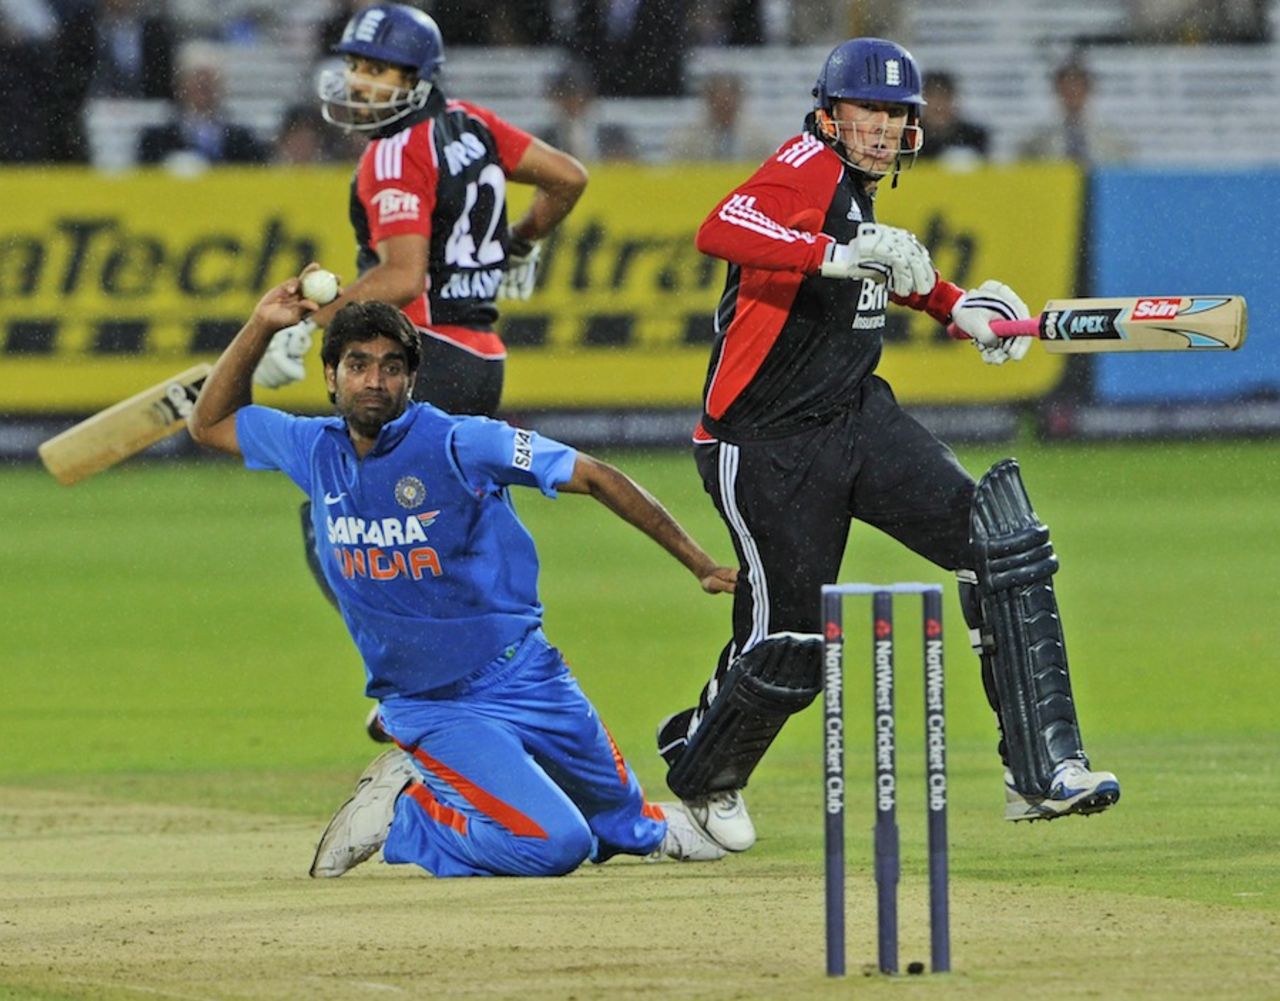 Munaf Patel prepares to run out Graeme Swann, England v India, 4th ODI, Lord's, September 11, 2011